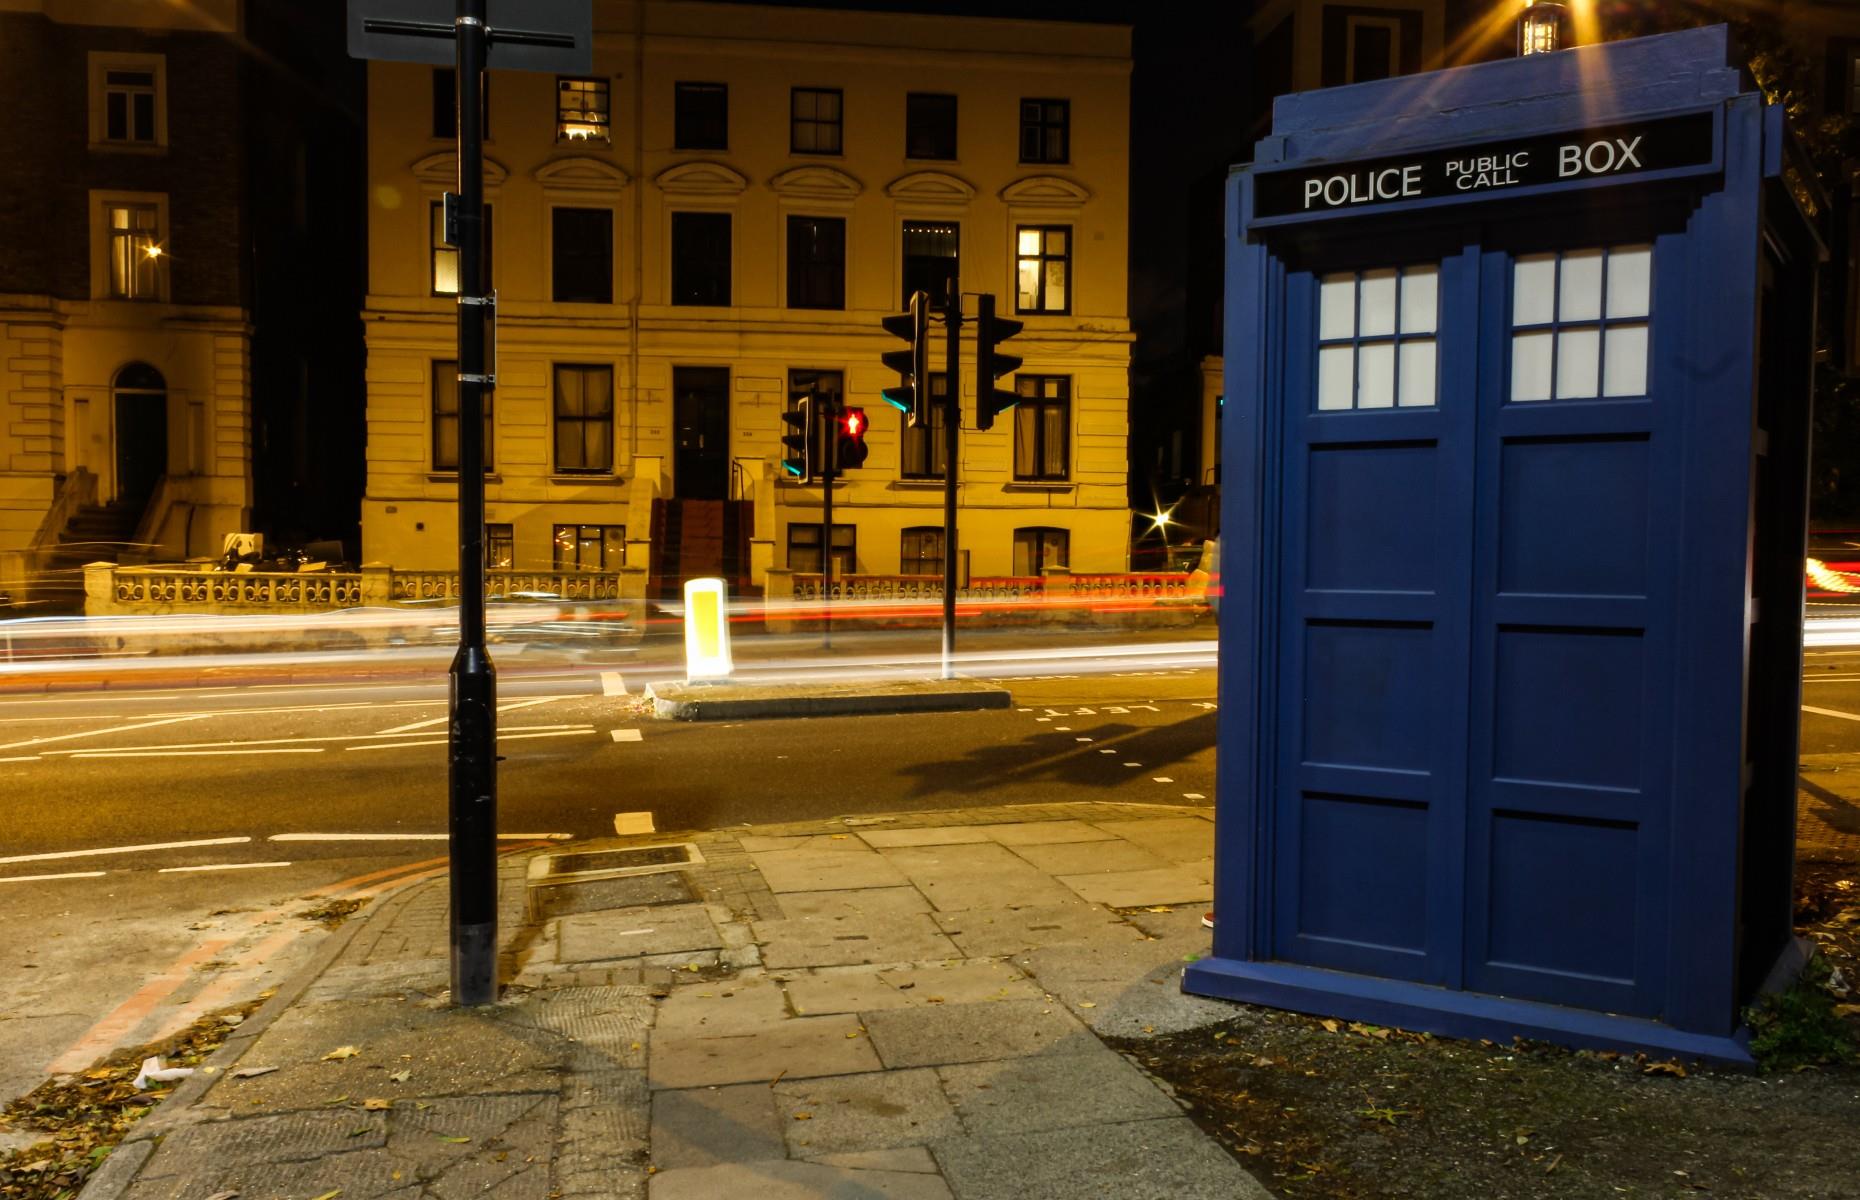 Doctor Who's TARDIS